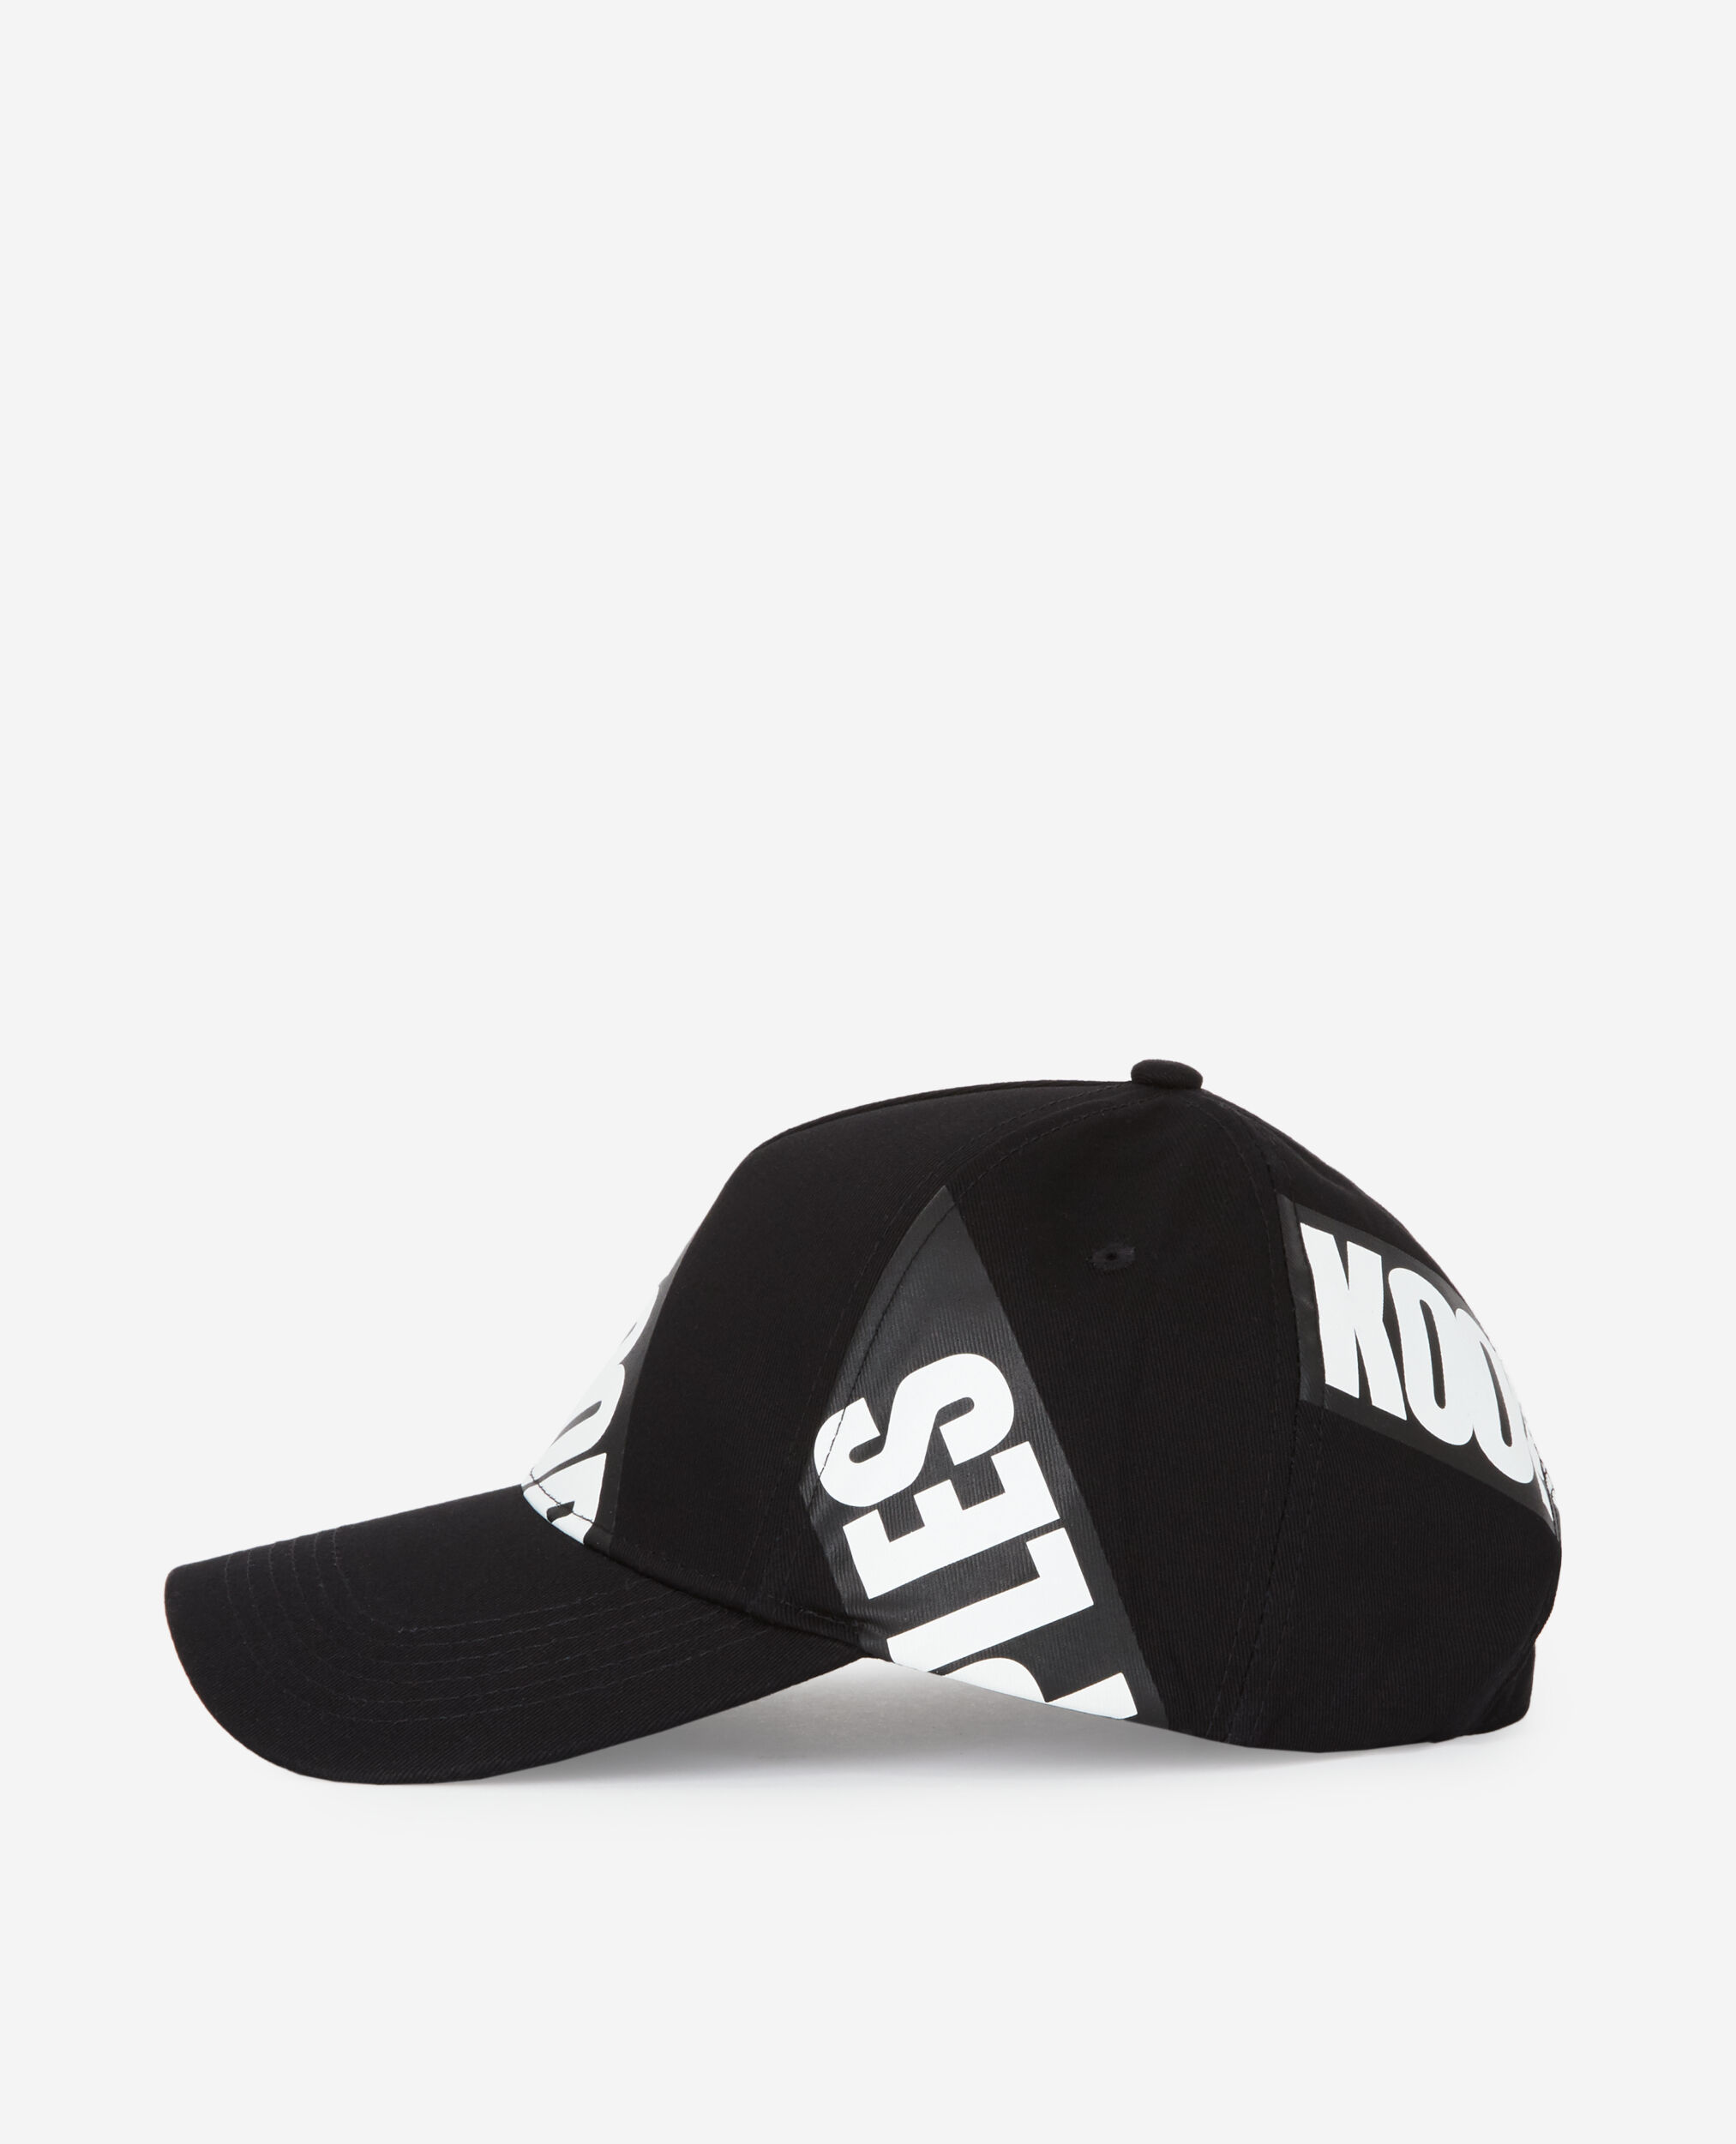 Black cap with Tape logo, BLACK, hi-res image number null